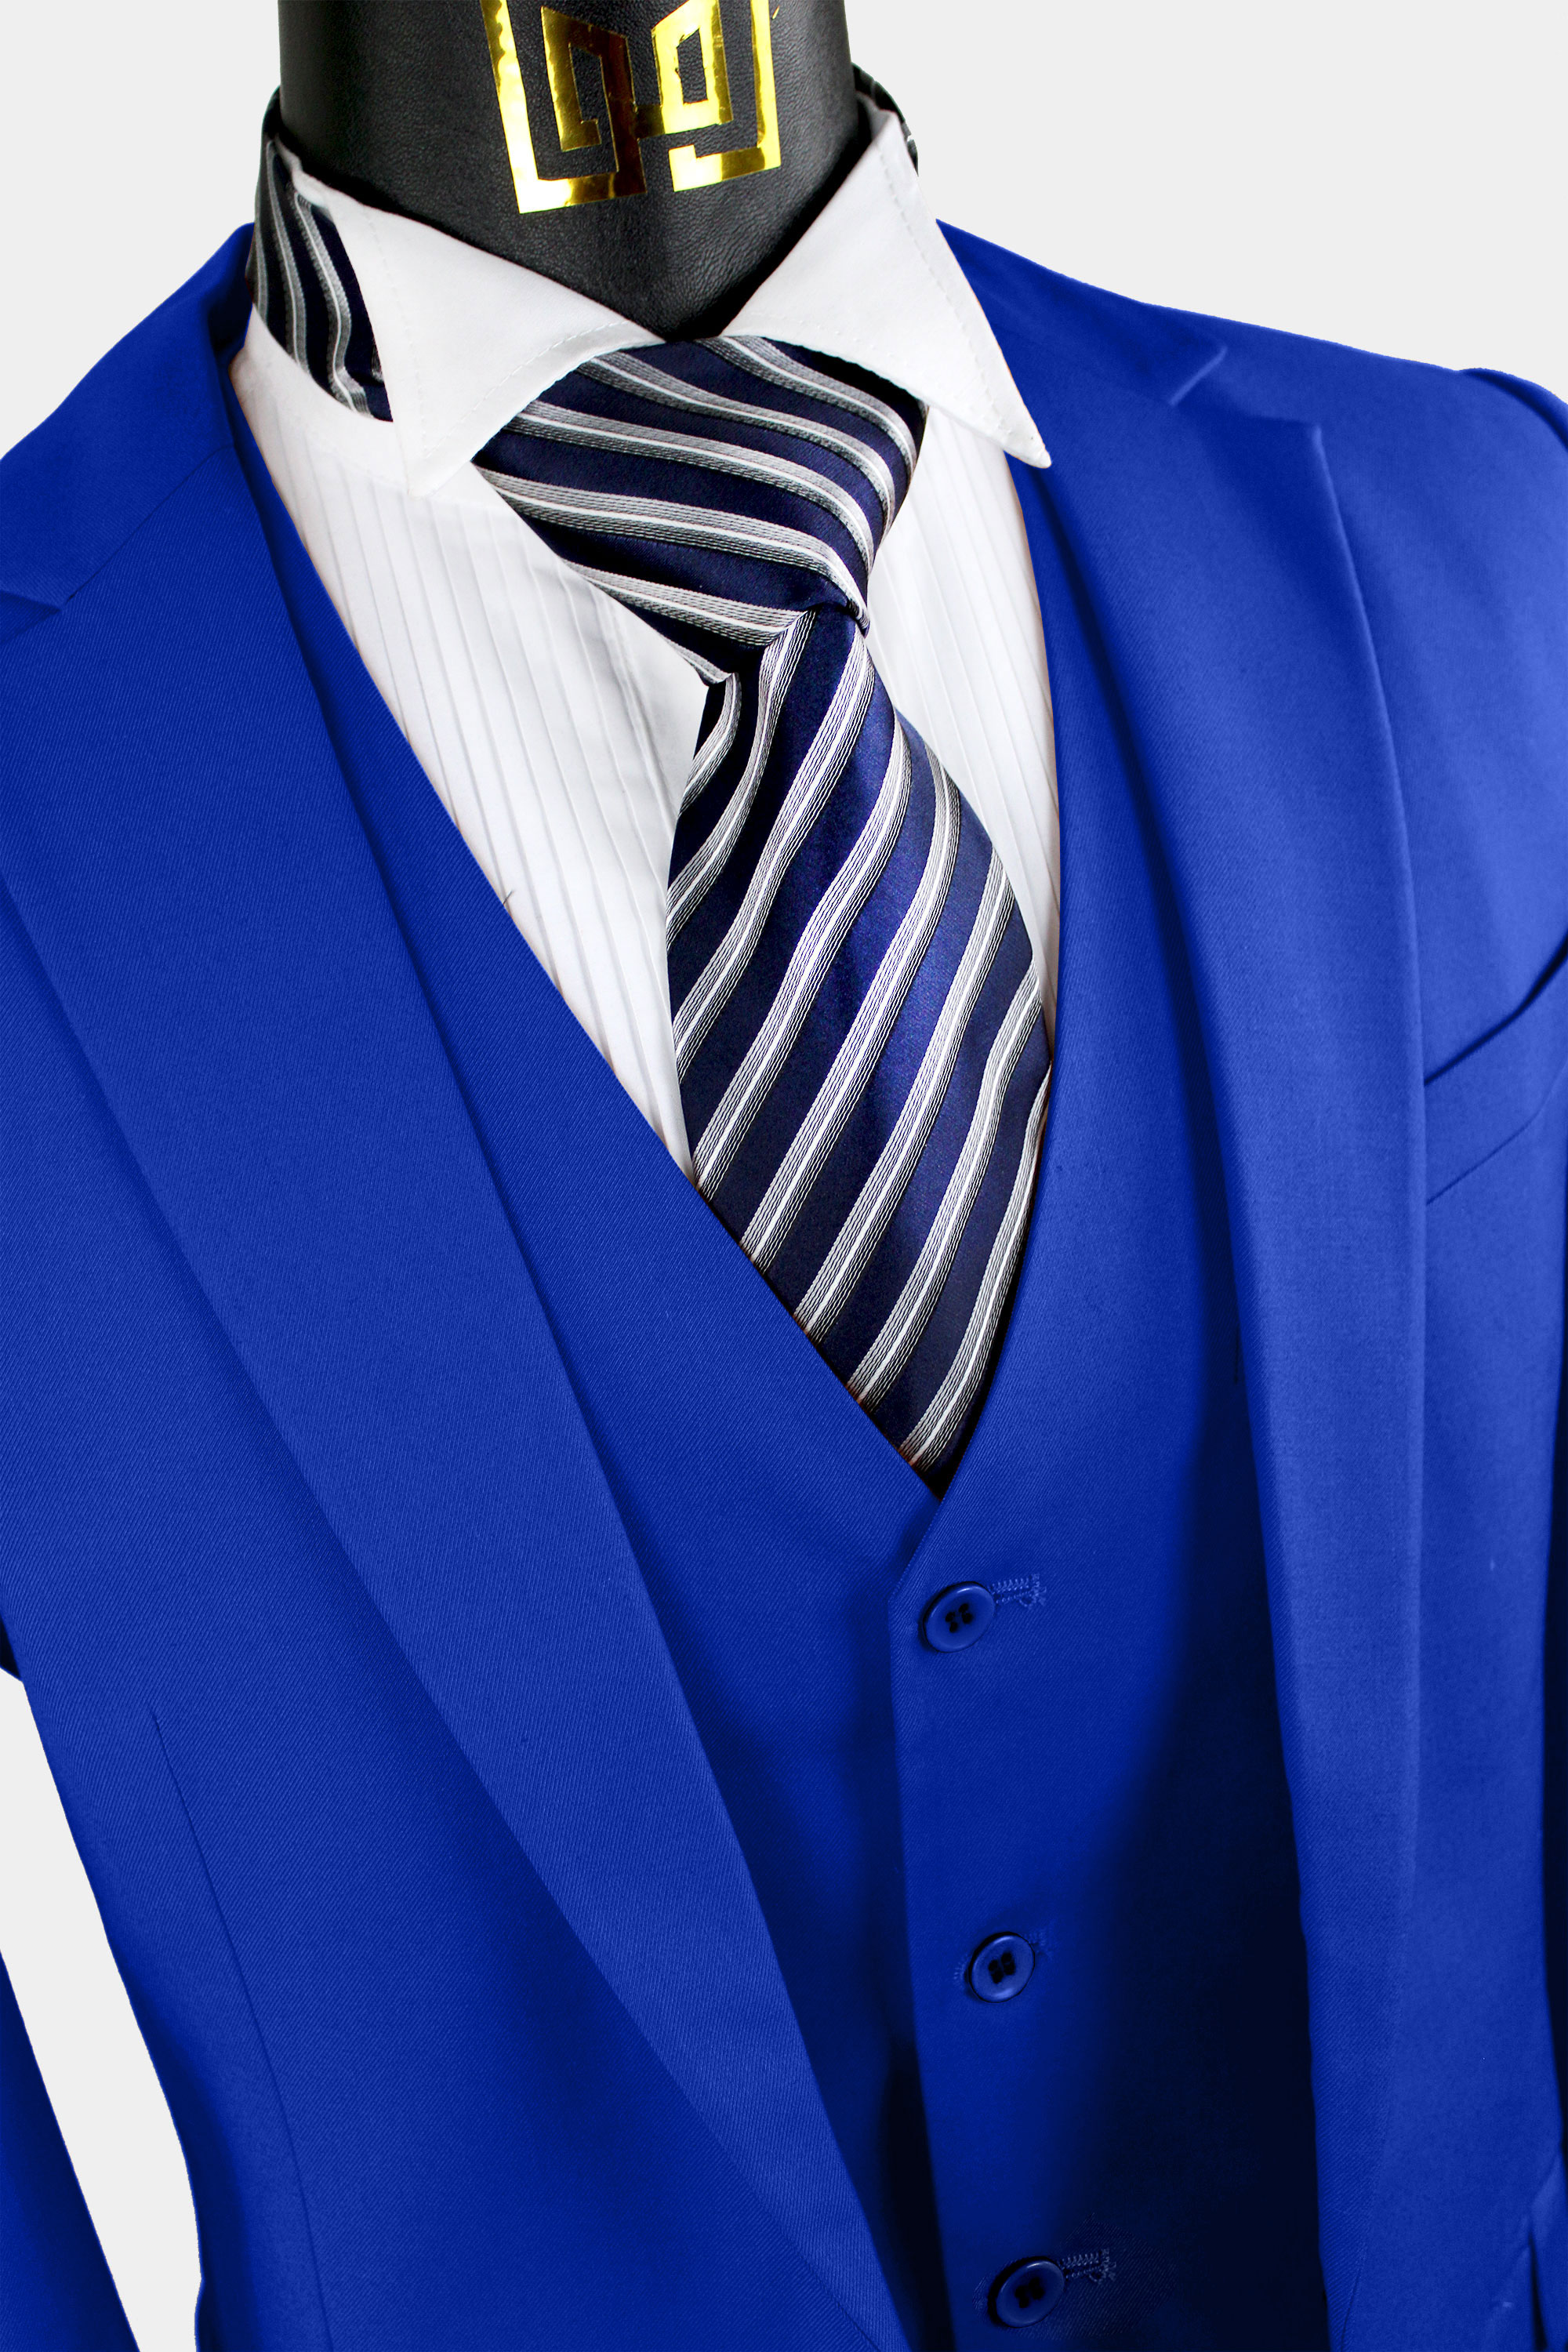 Royal-Blue-Suit-For-Men-from-Gentlemansguru.com